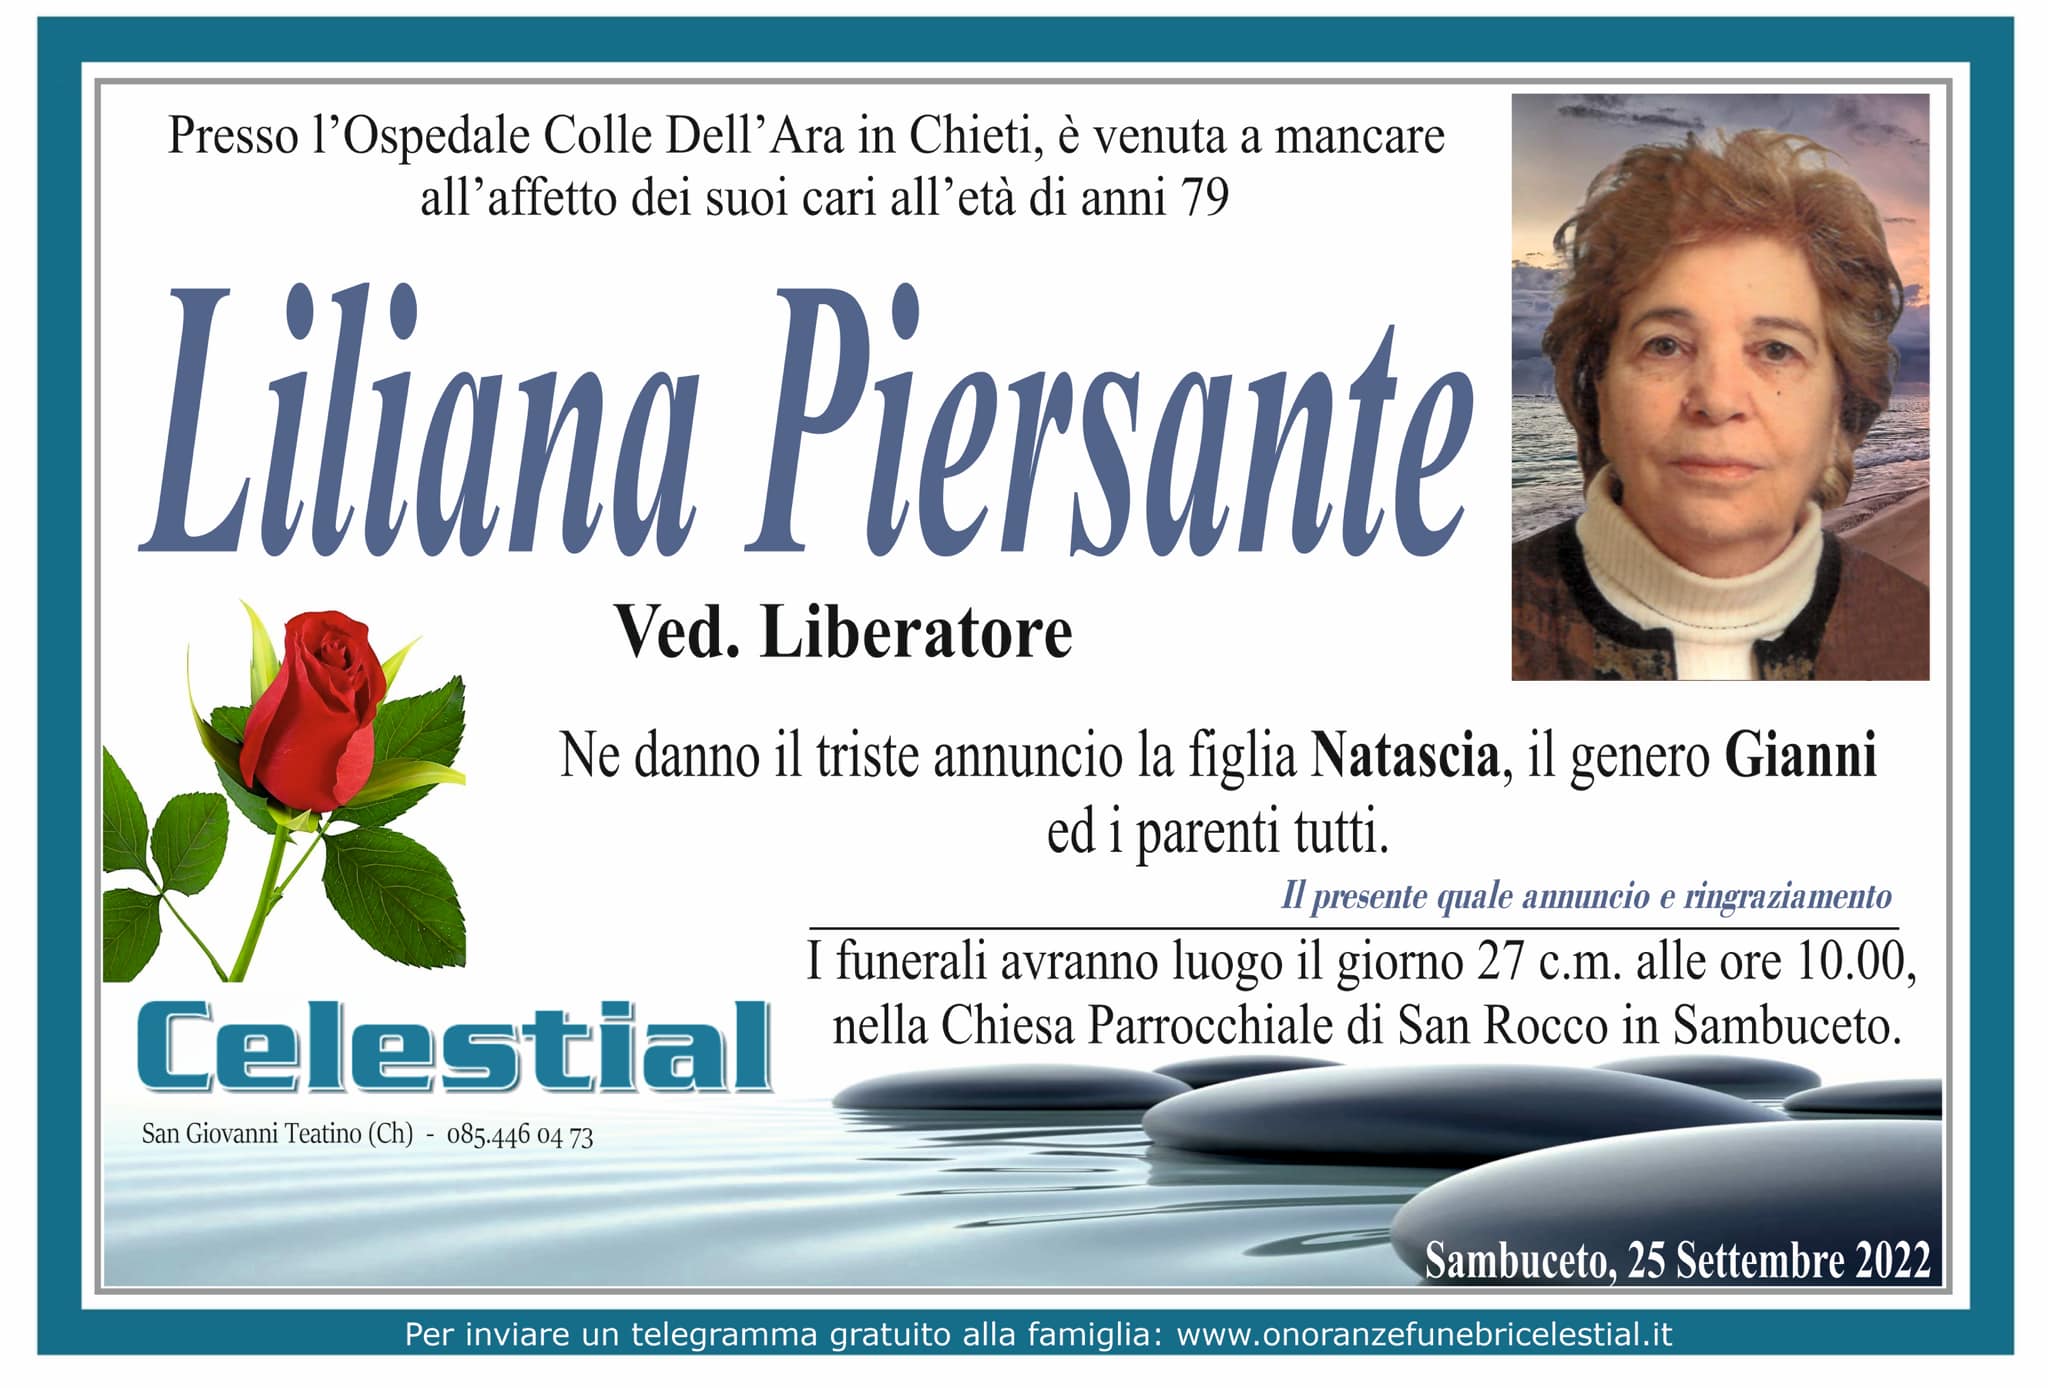 Liliana Piersante